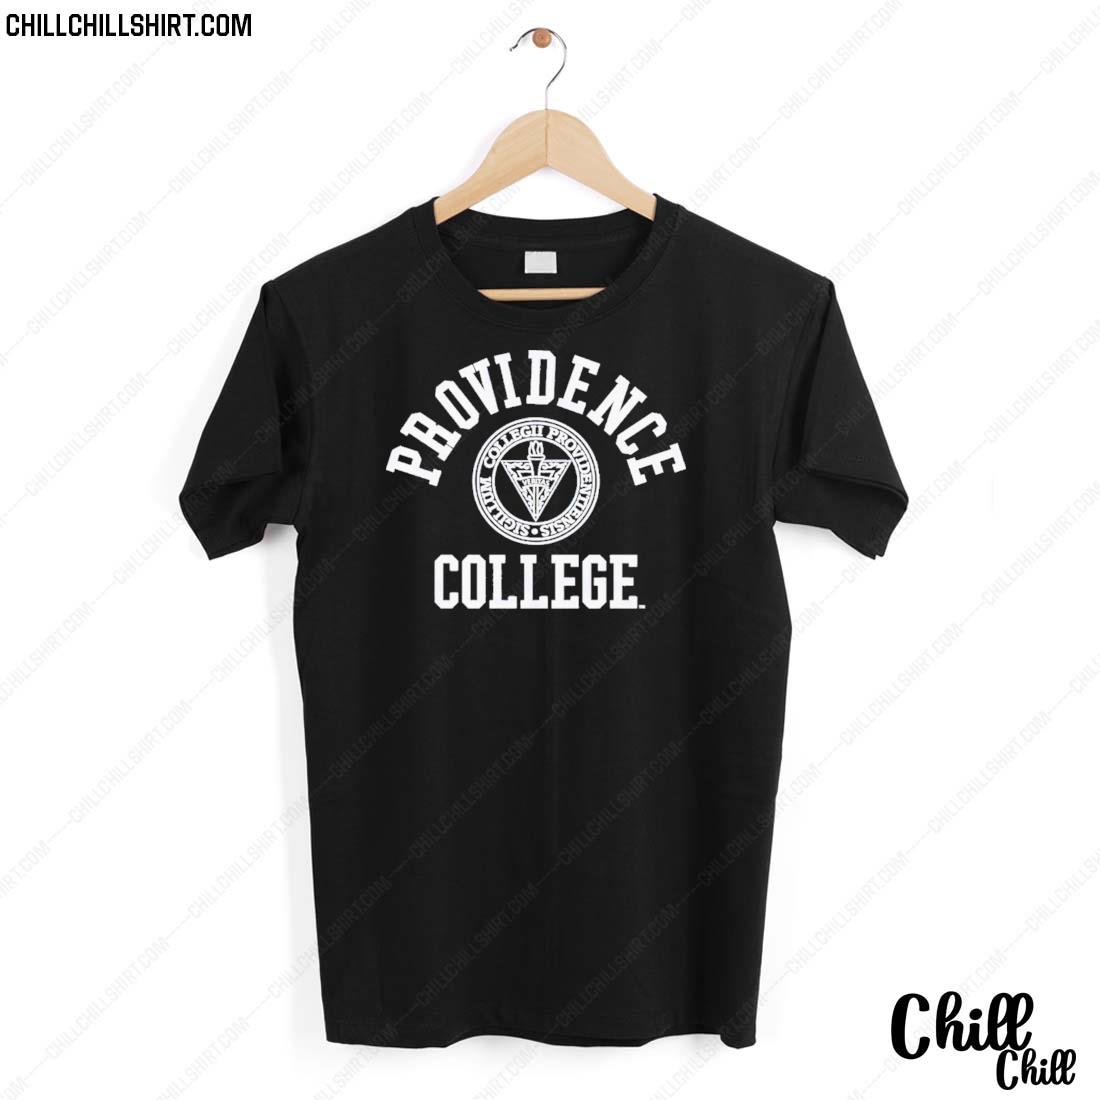 Nice providence College Sigillum T-shirt